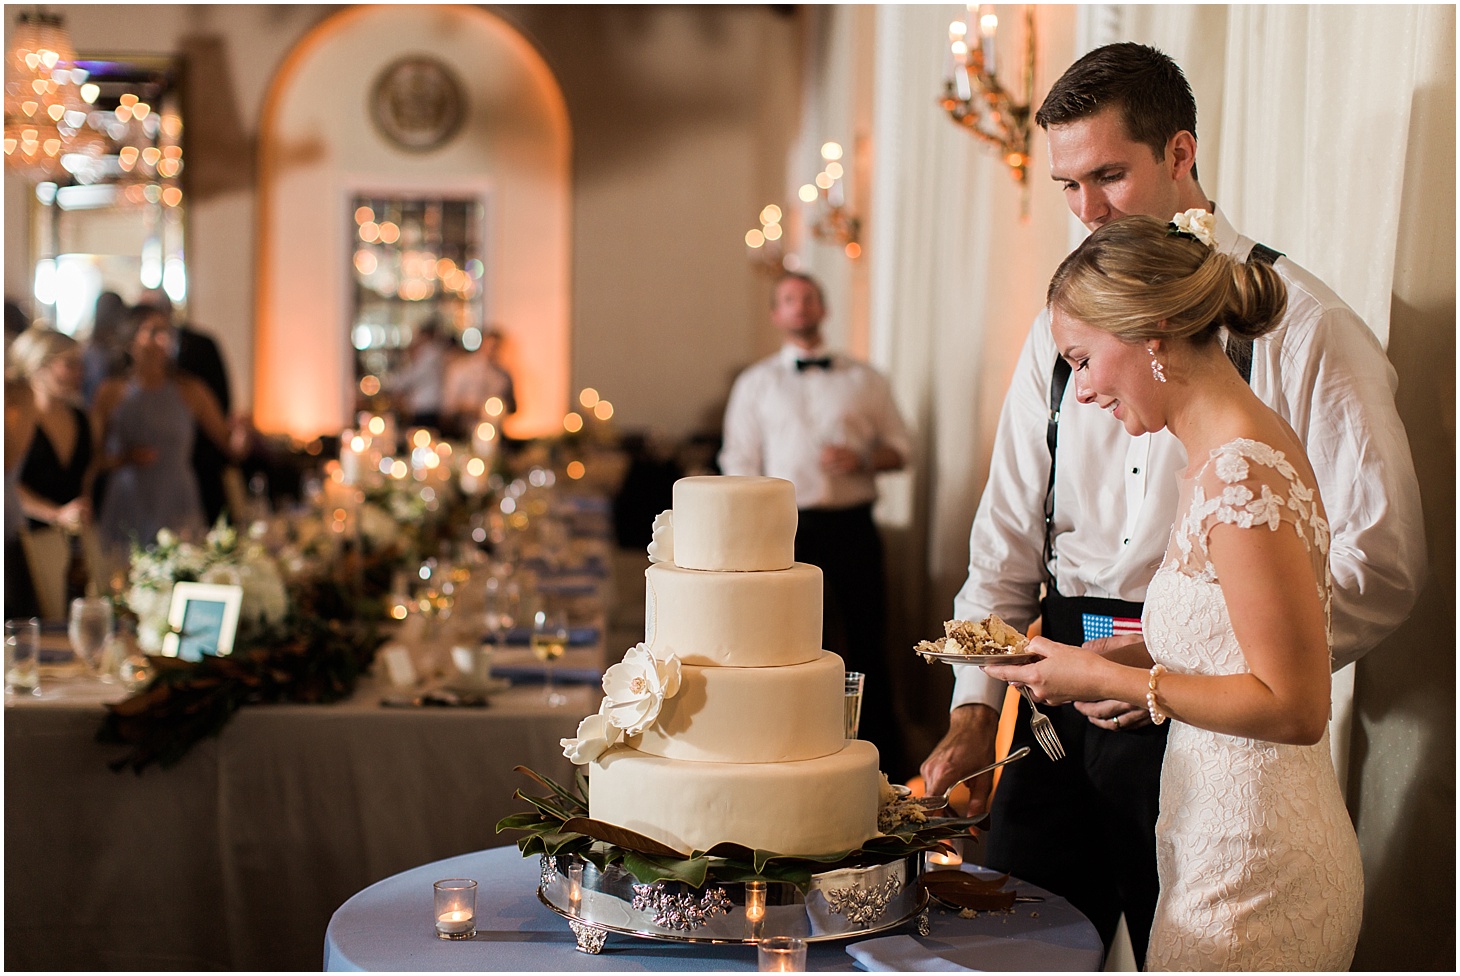 Wedding Reception at the St. Regis Washington, DC | Southern Black Tie Wedding in Dusty Blue and Ivory | Sarah Bradshaw Photography